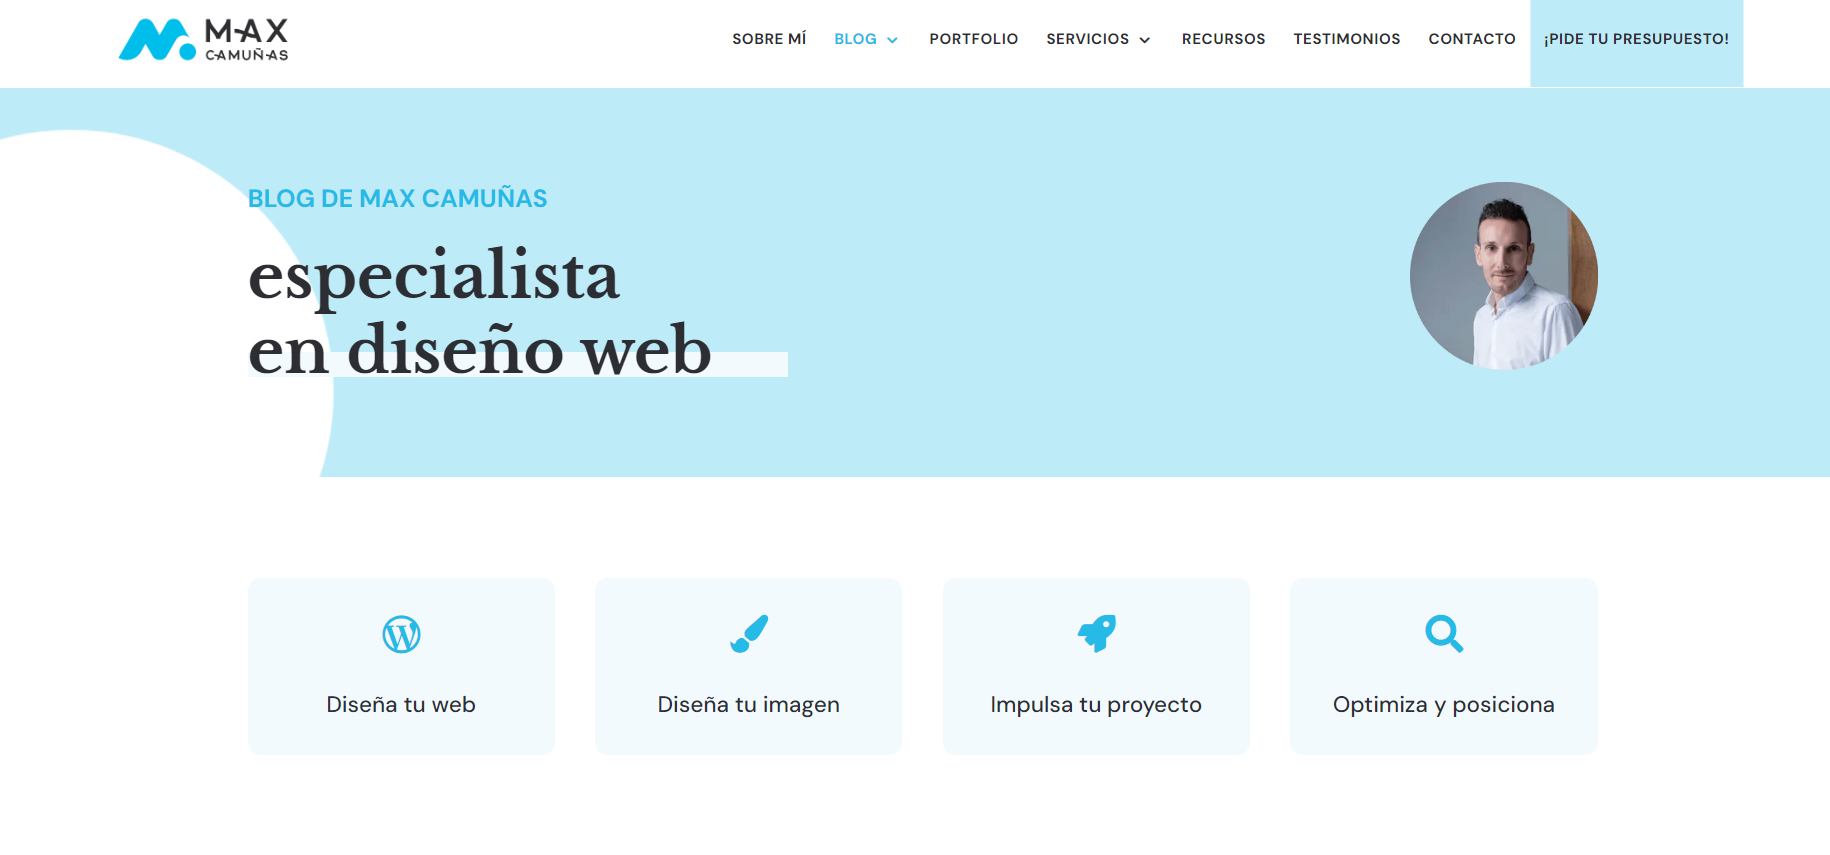 Max Camuñas Mejores Blogs WordPress Espanol Modular